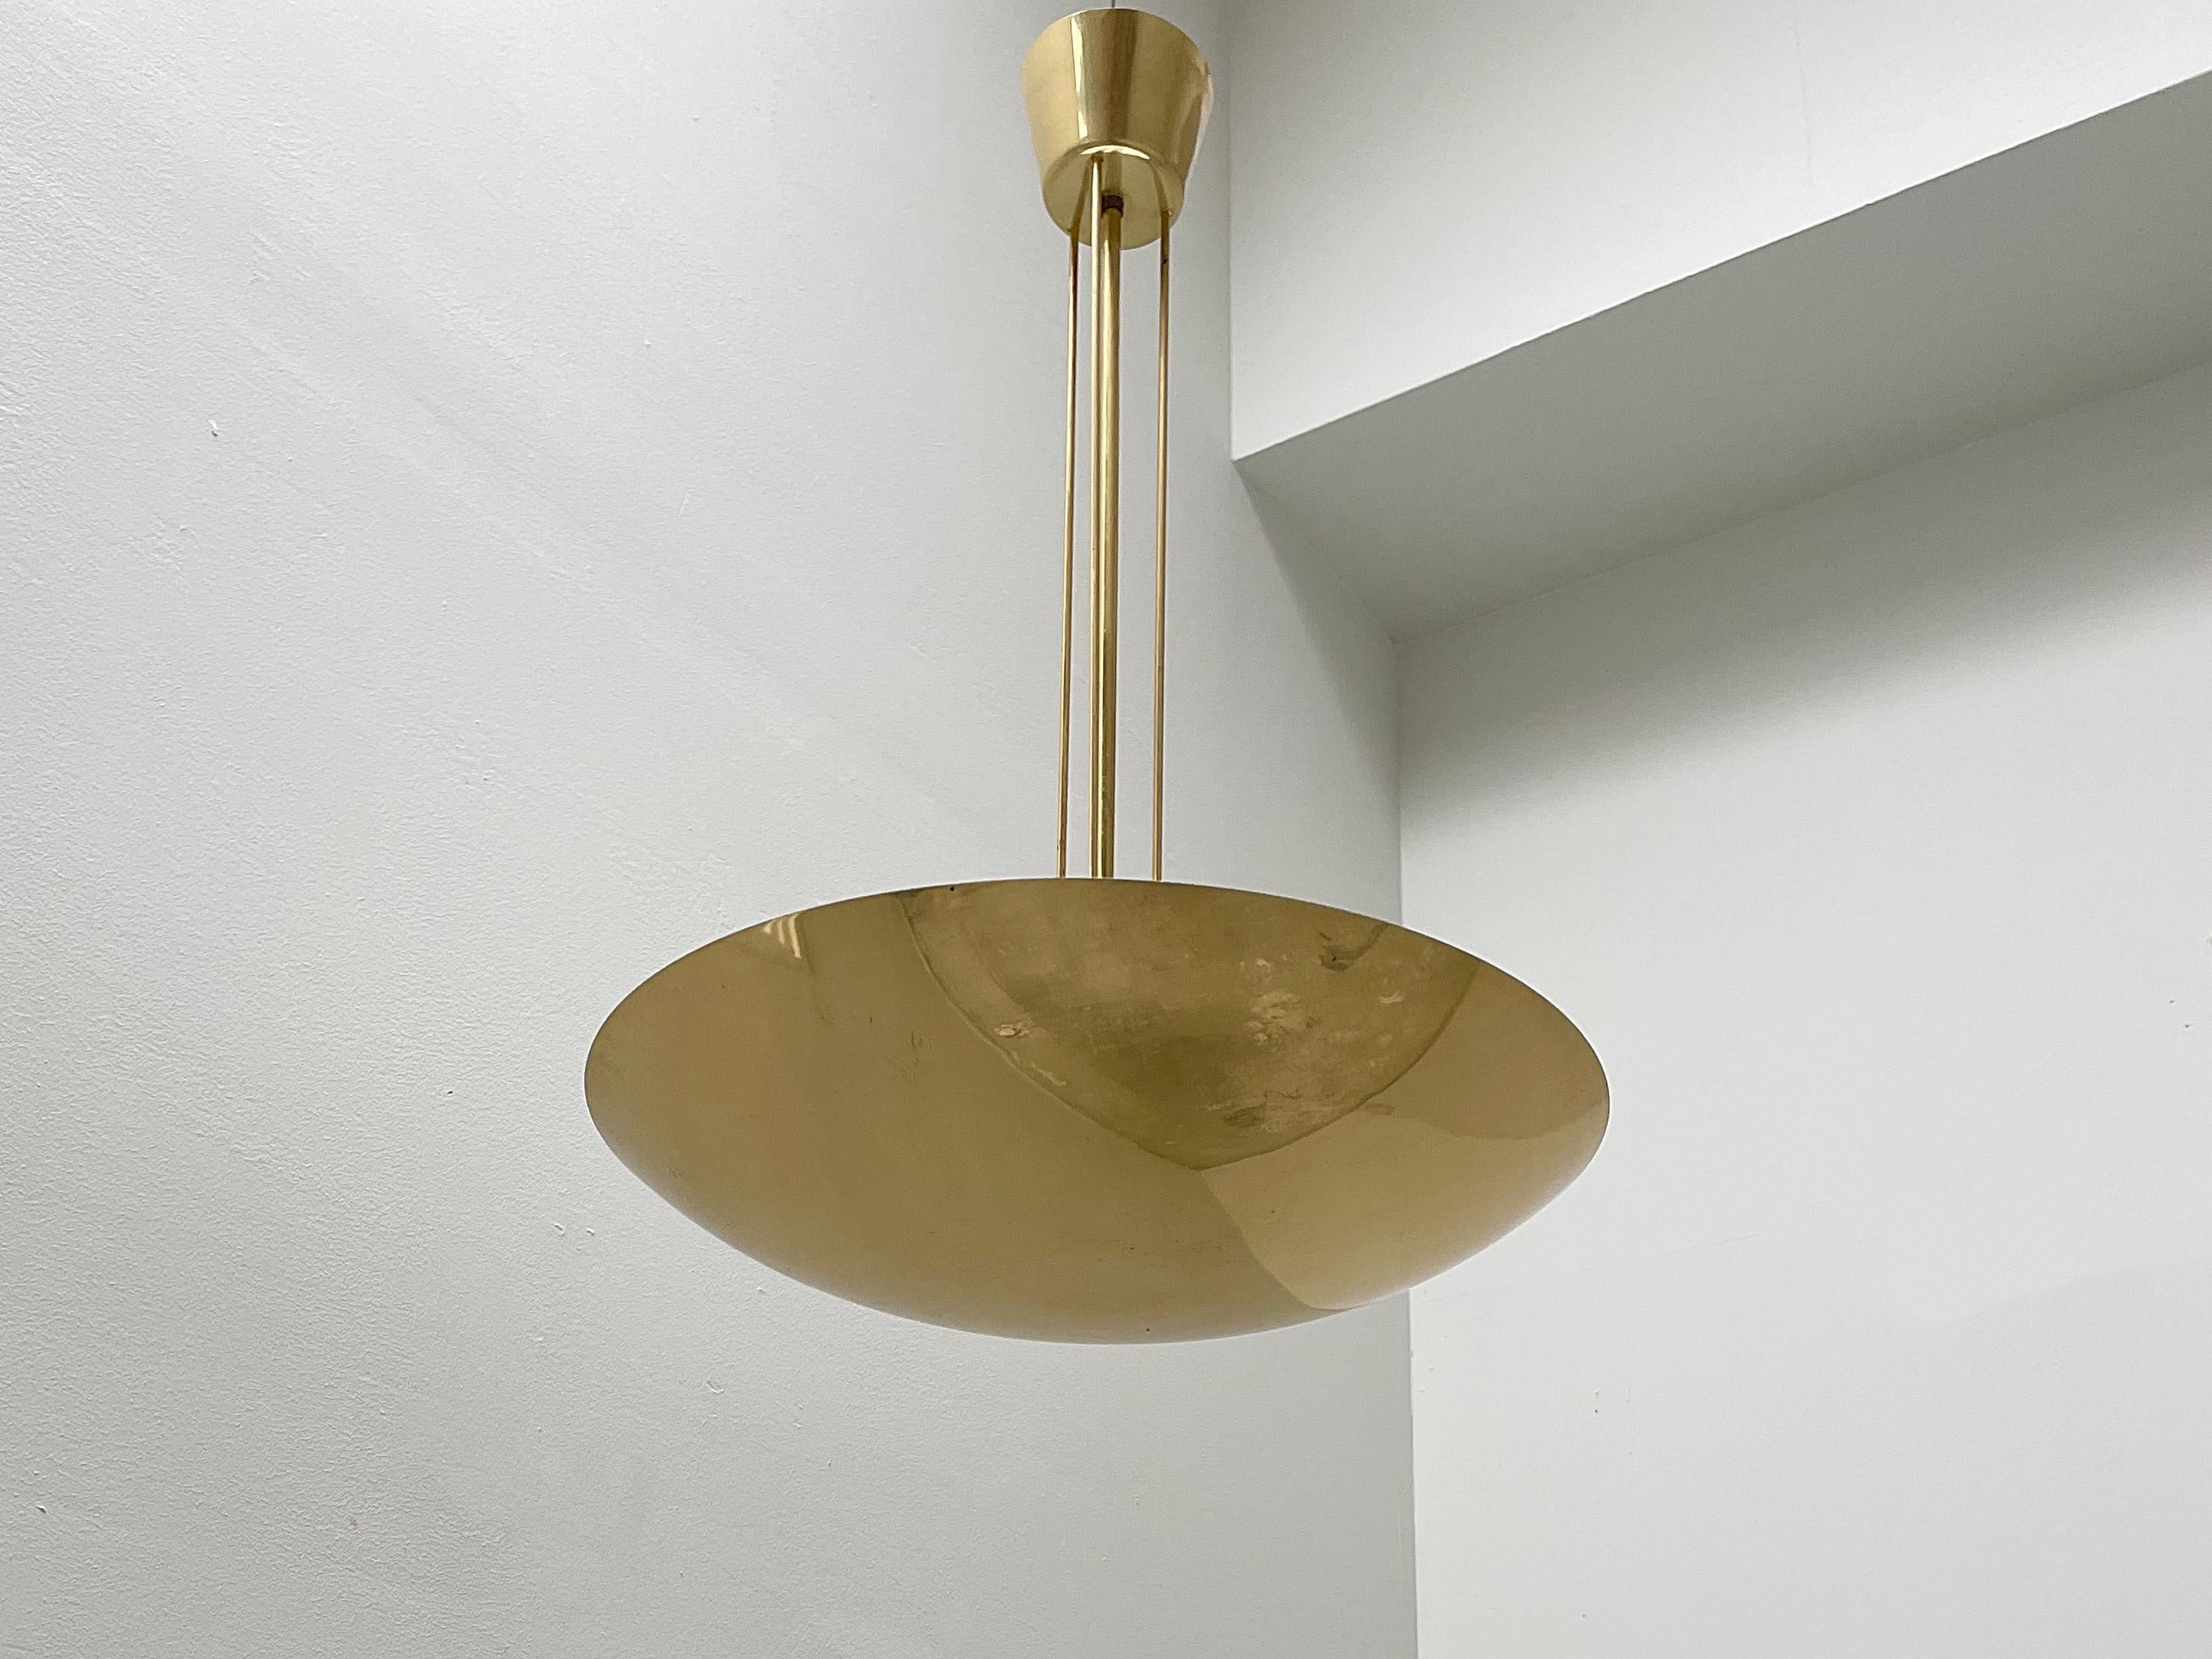 Polished J.T. KALMAR Uplight Ceiling Brass Lamp, Chandelier, Mod. 8585, 1960s, Austria For Sale